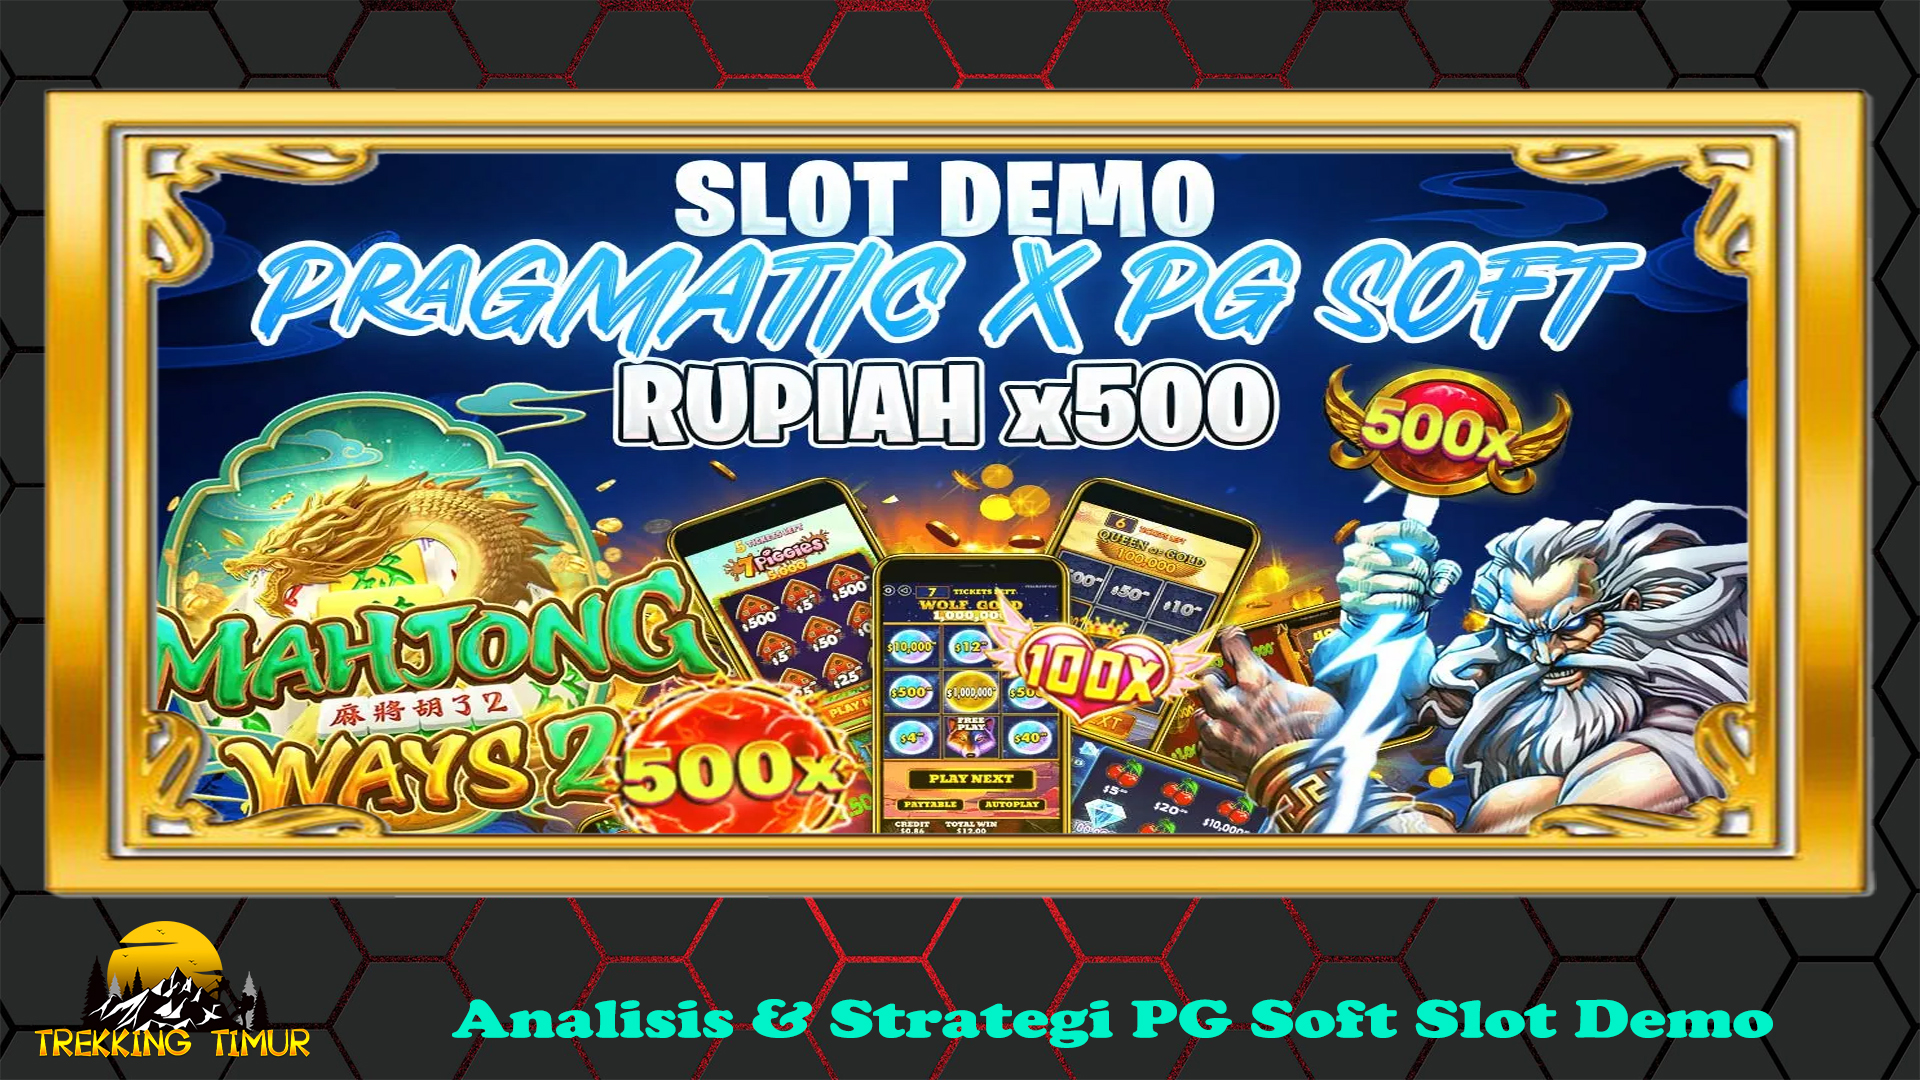 Analisis & Strategi PG Soft Slot Demo